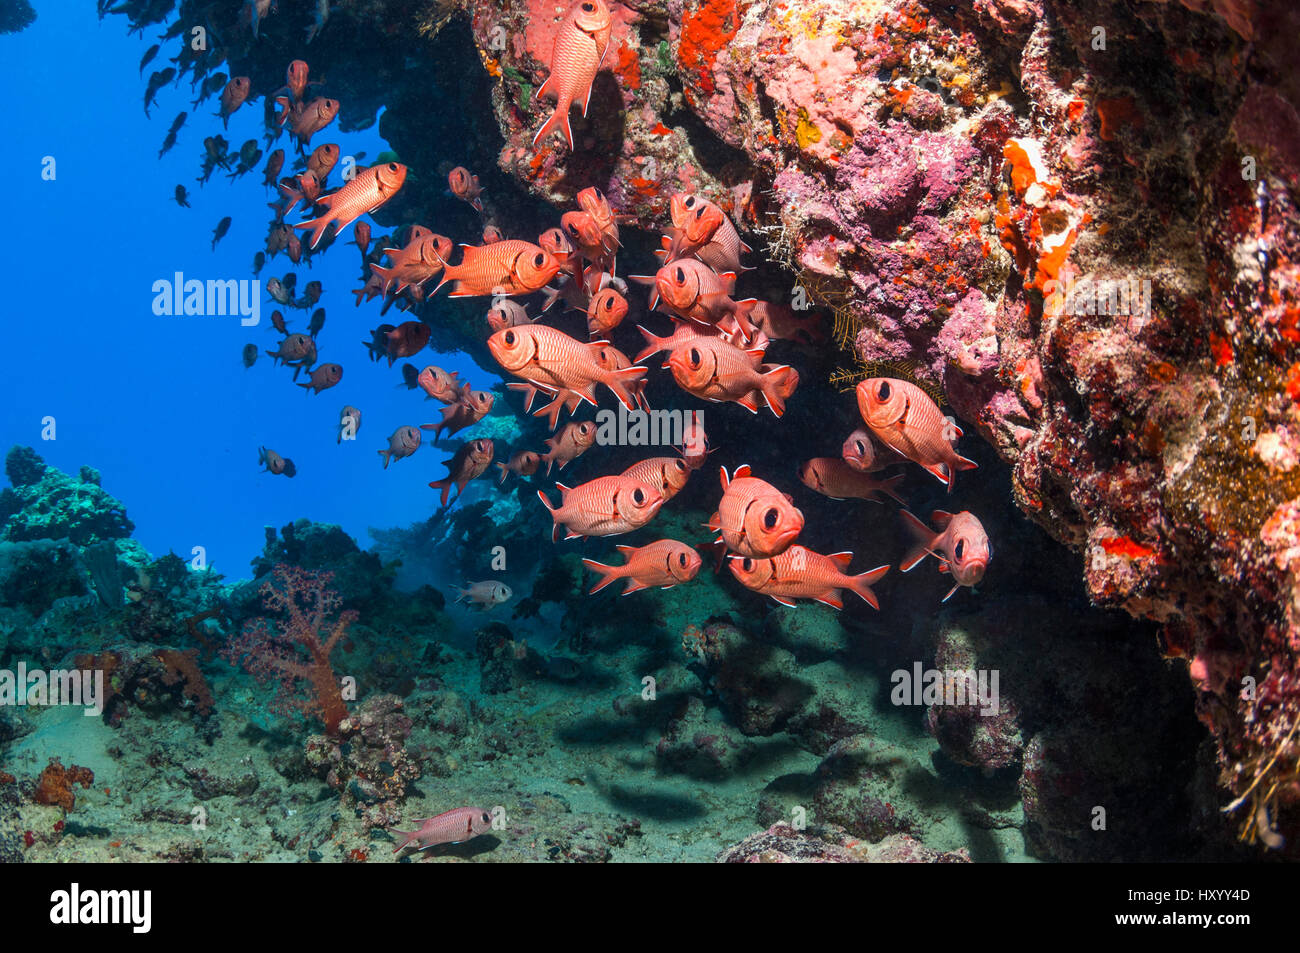 School of Red soldierfish (Myripristis murdjan). Egypt, Red Sea. Stock Photo